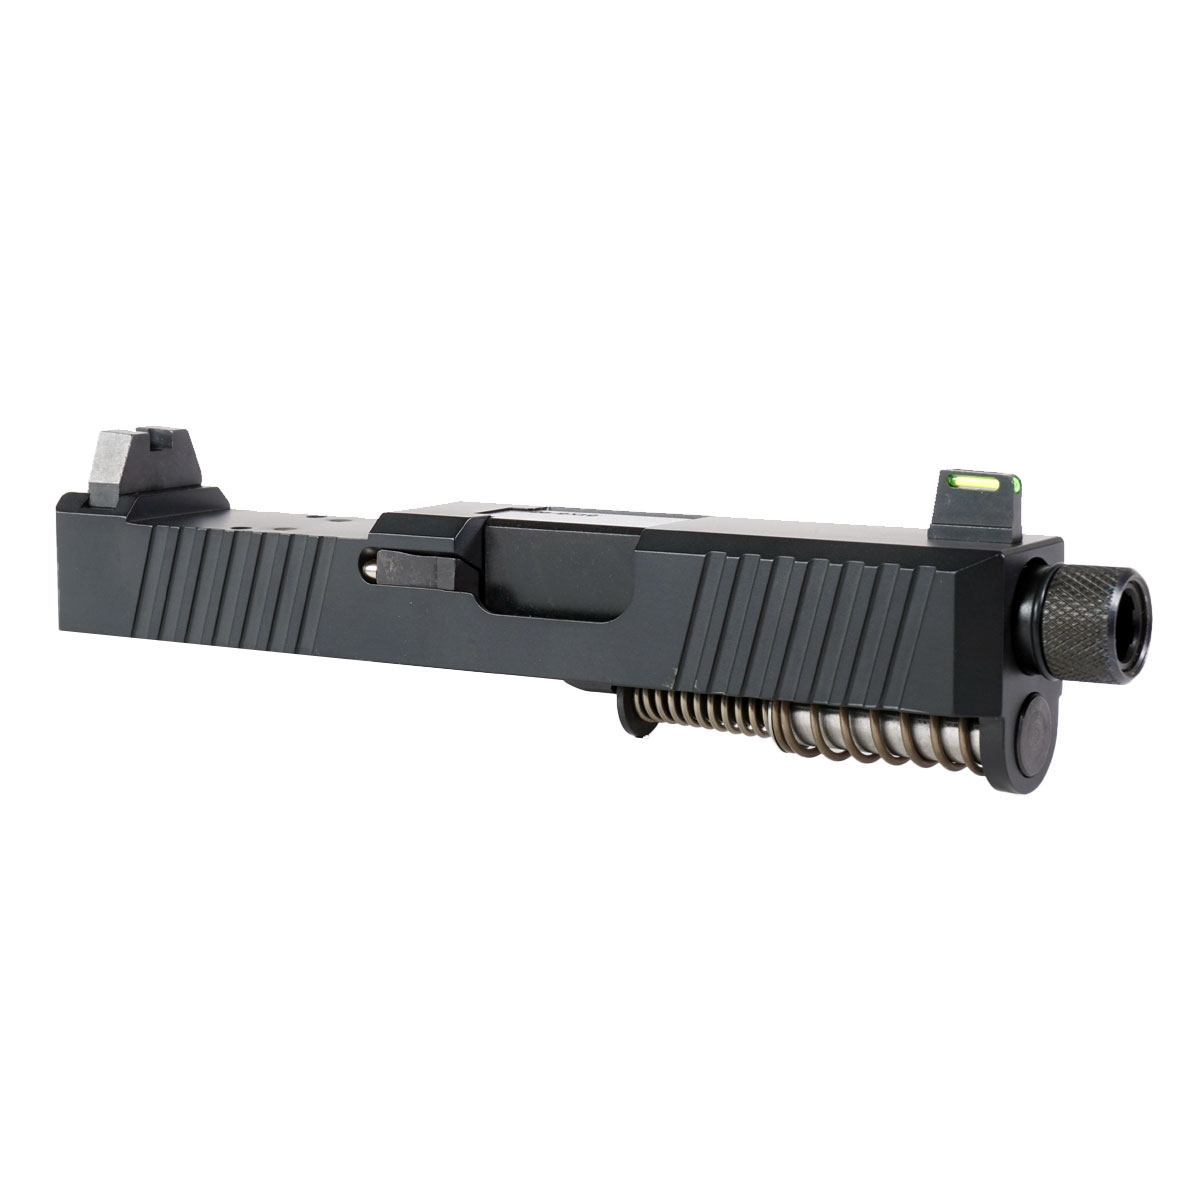 DTT 'Creature Fear' 9mm Complete Slide Kit - Glock 26 Gen 1-3 Compatible